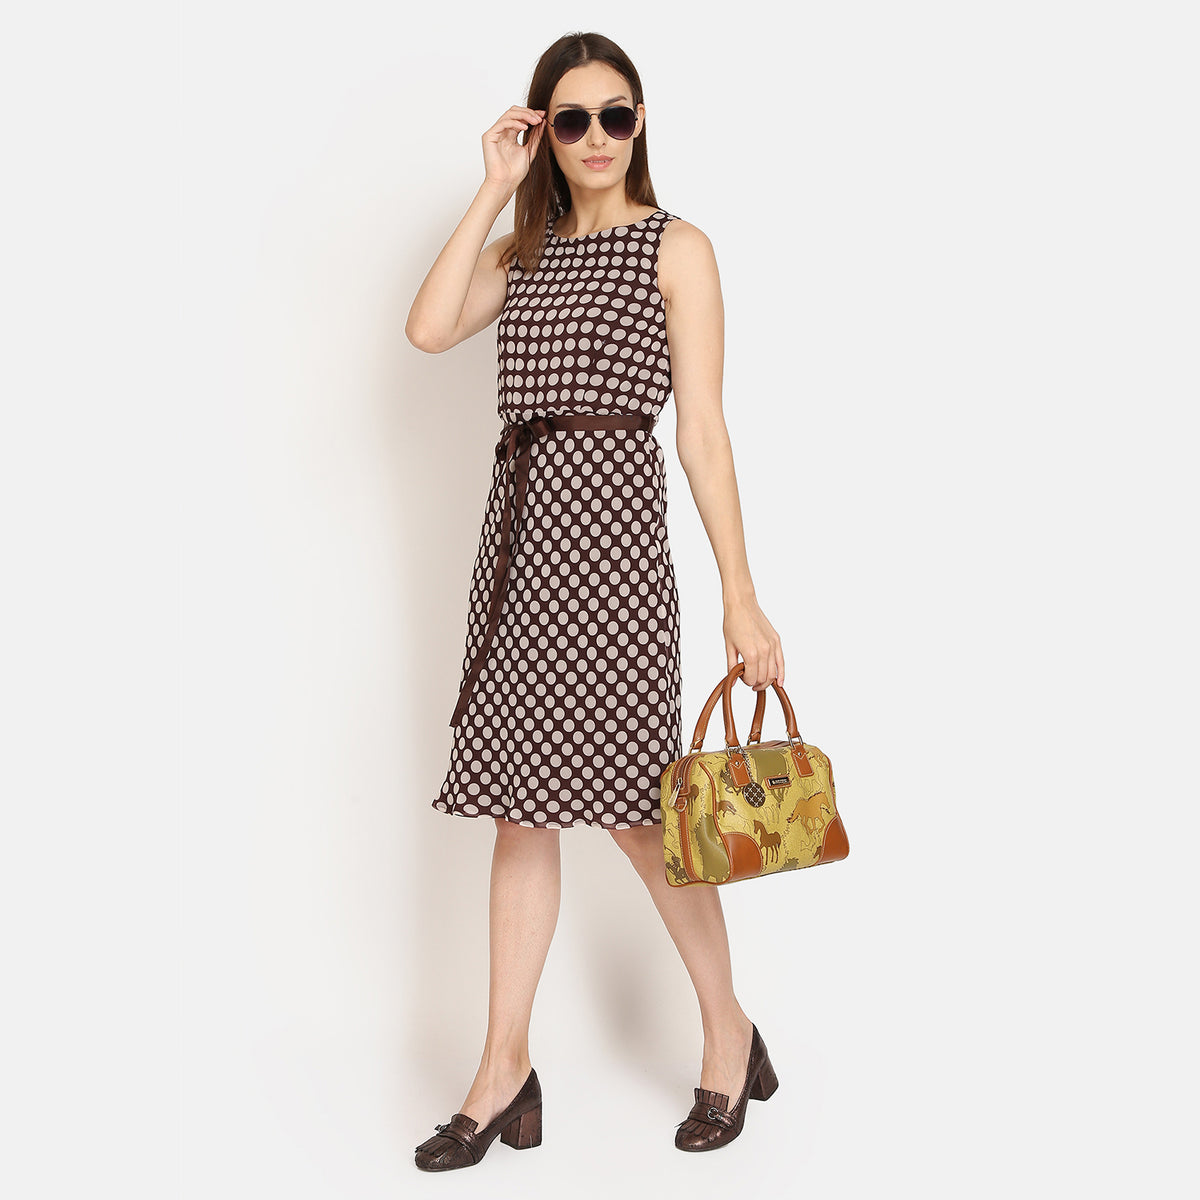 Brown polka dot sleeveless dress with brown belt